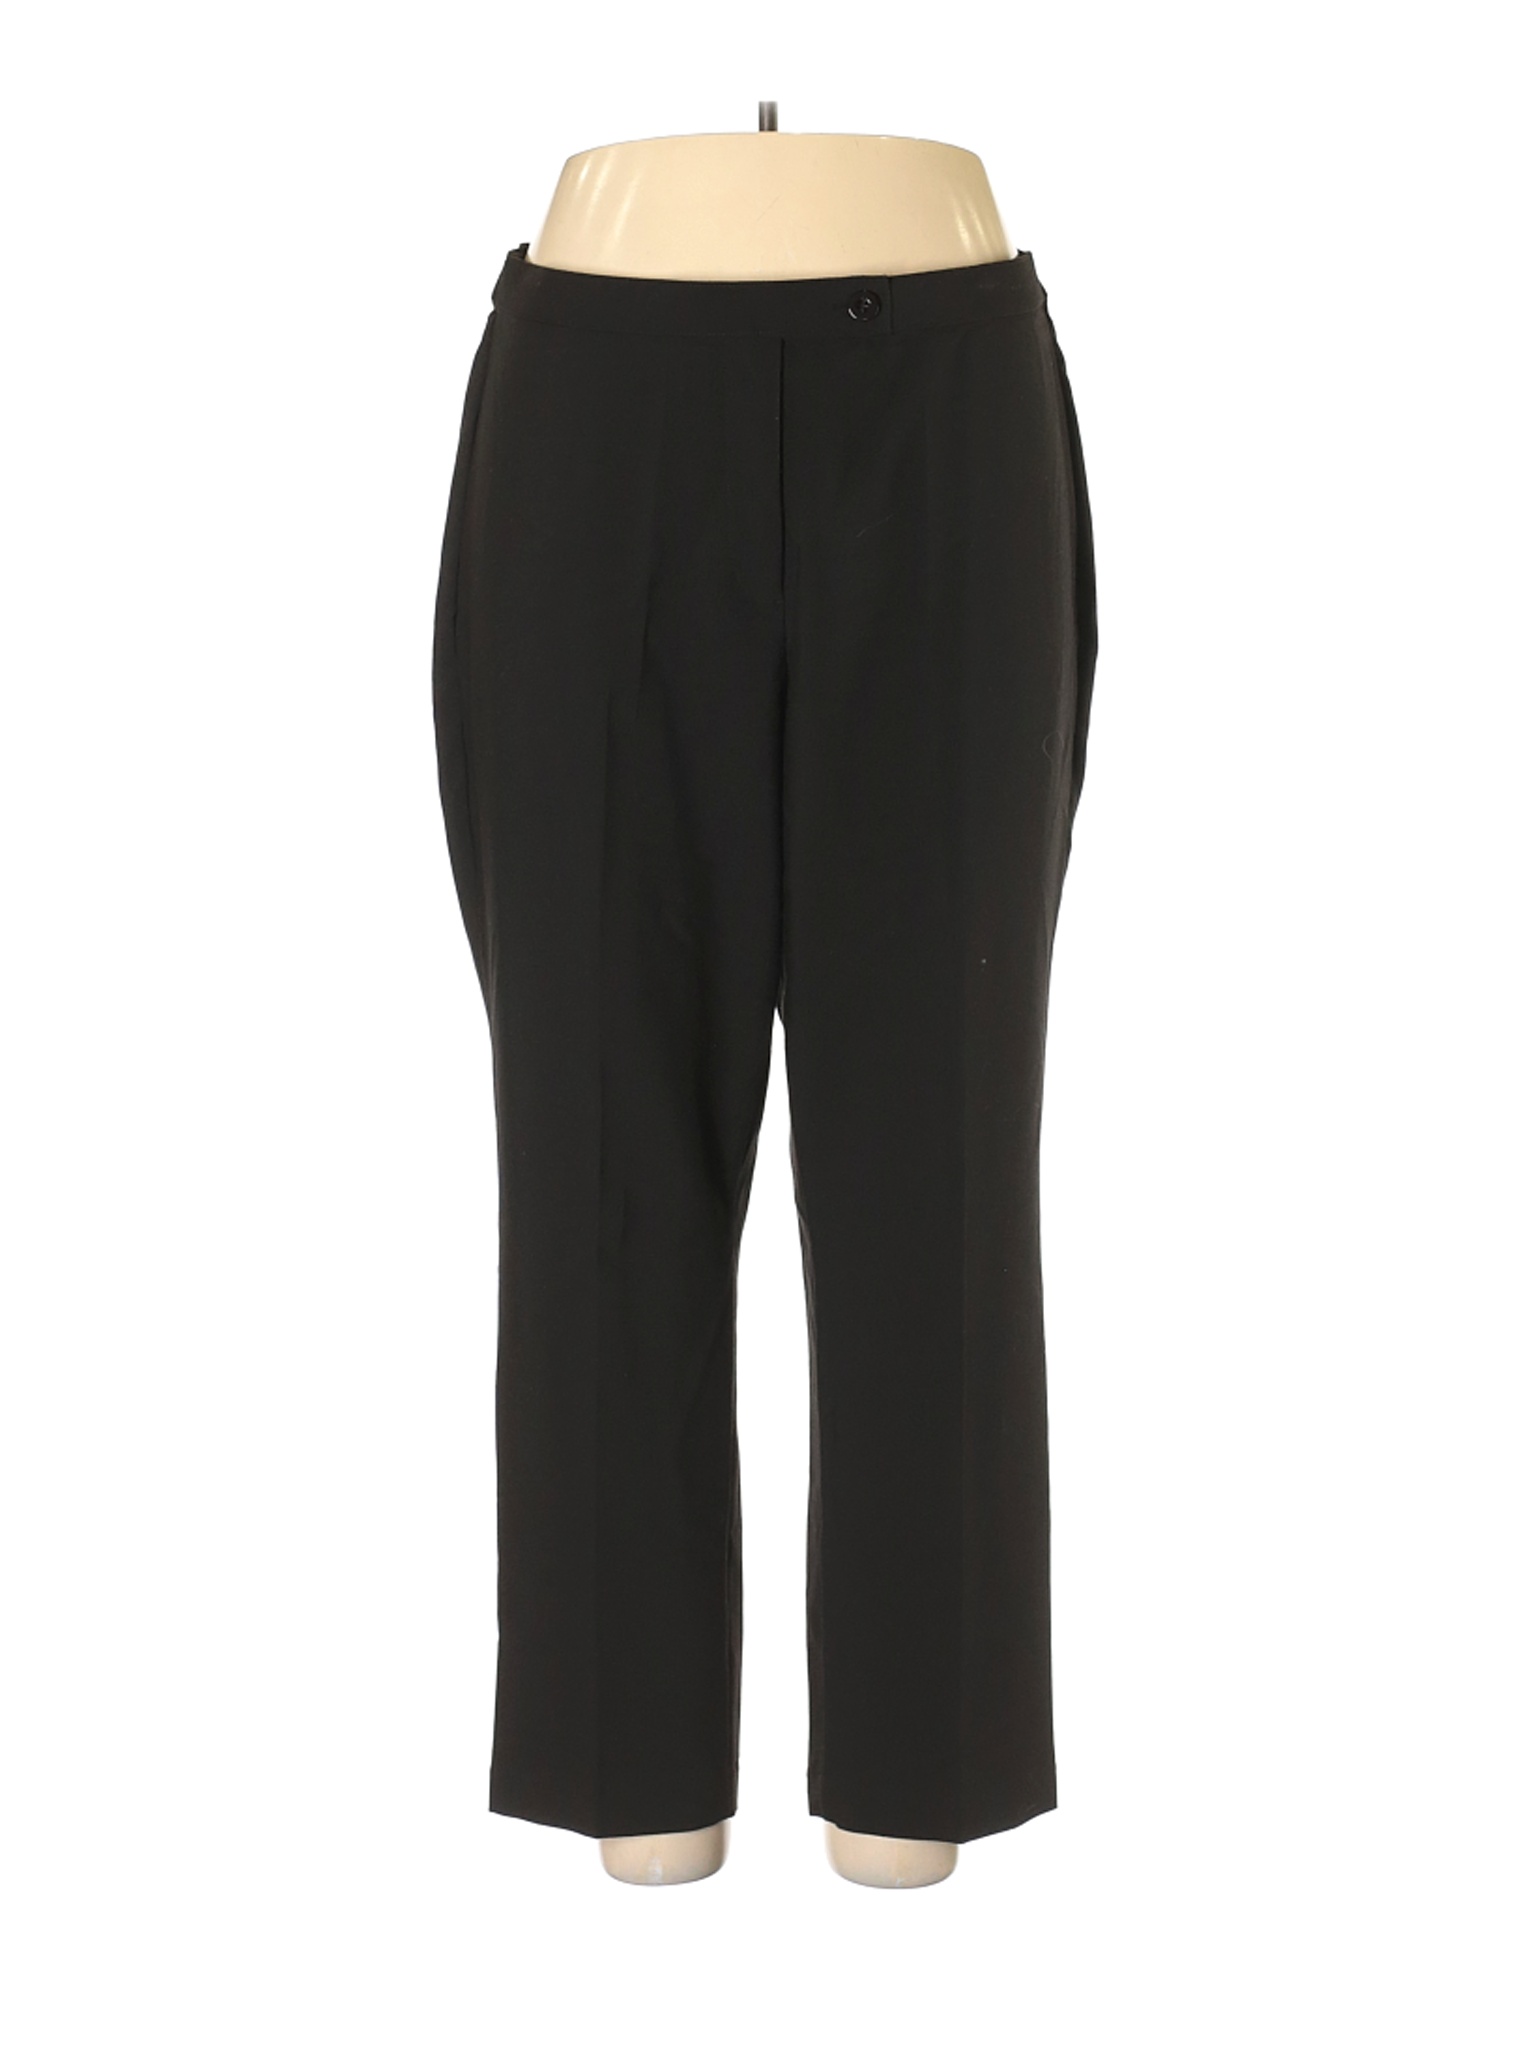 Kim Rogers Women Black Dress Pants 18 Plus | eBay